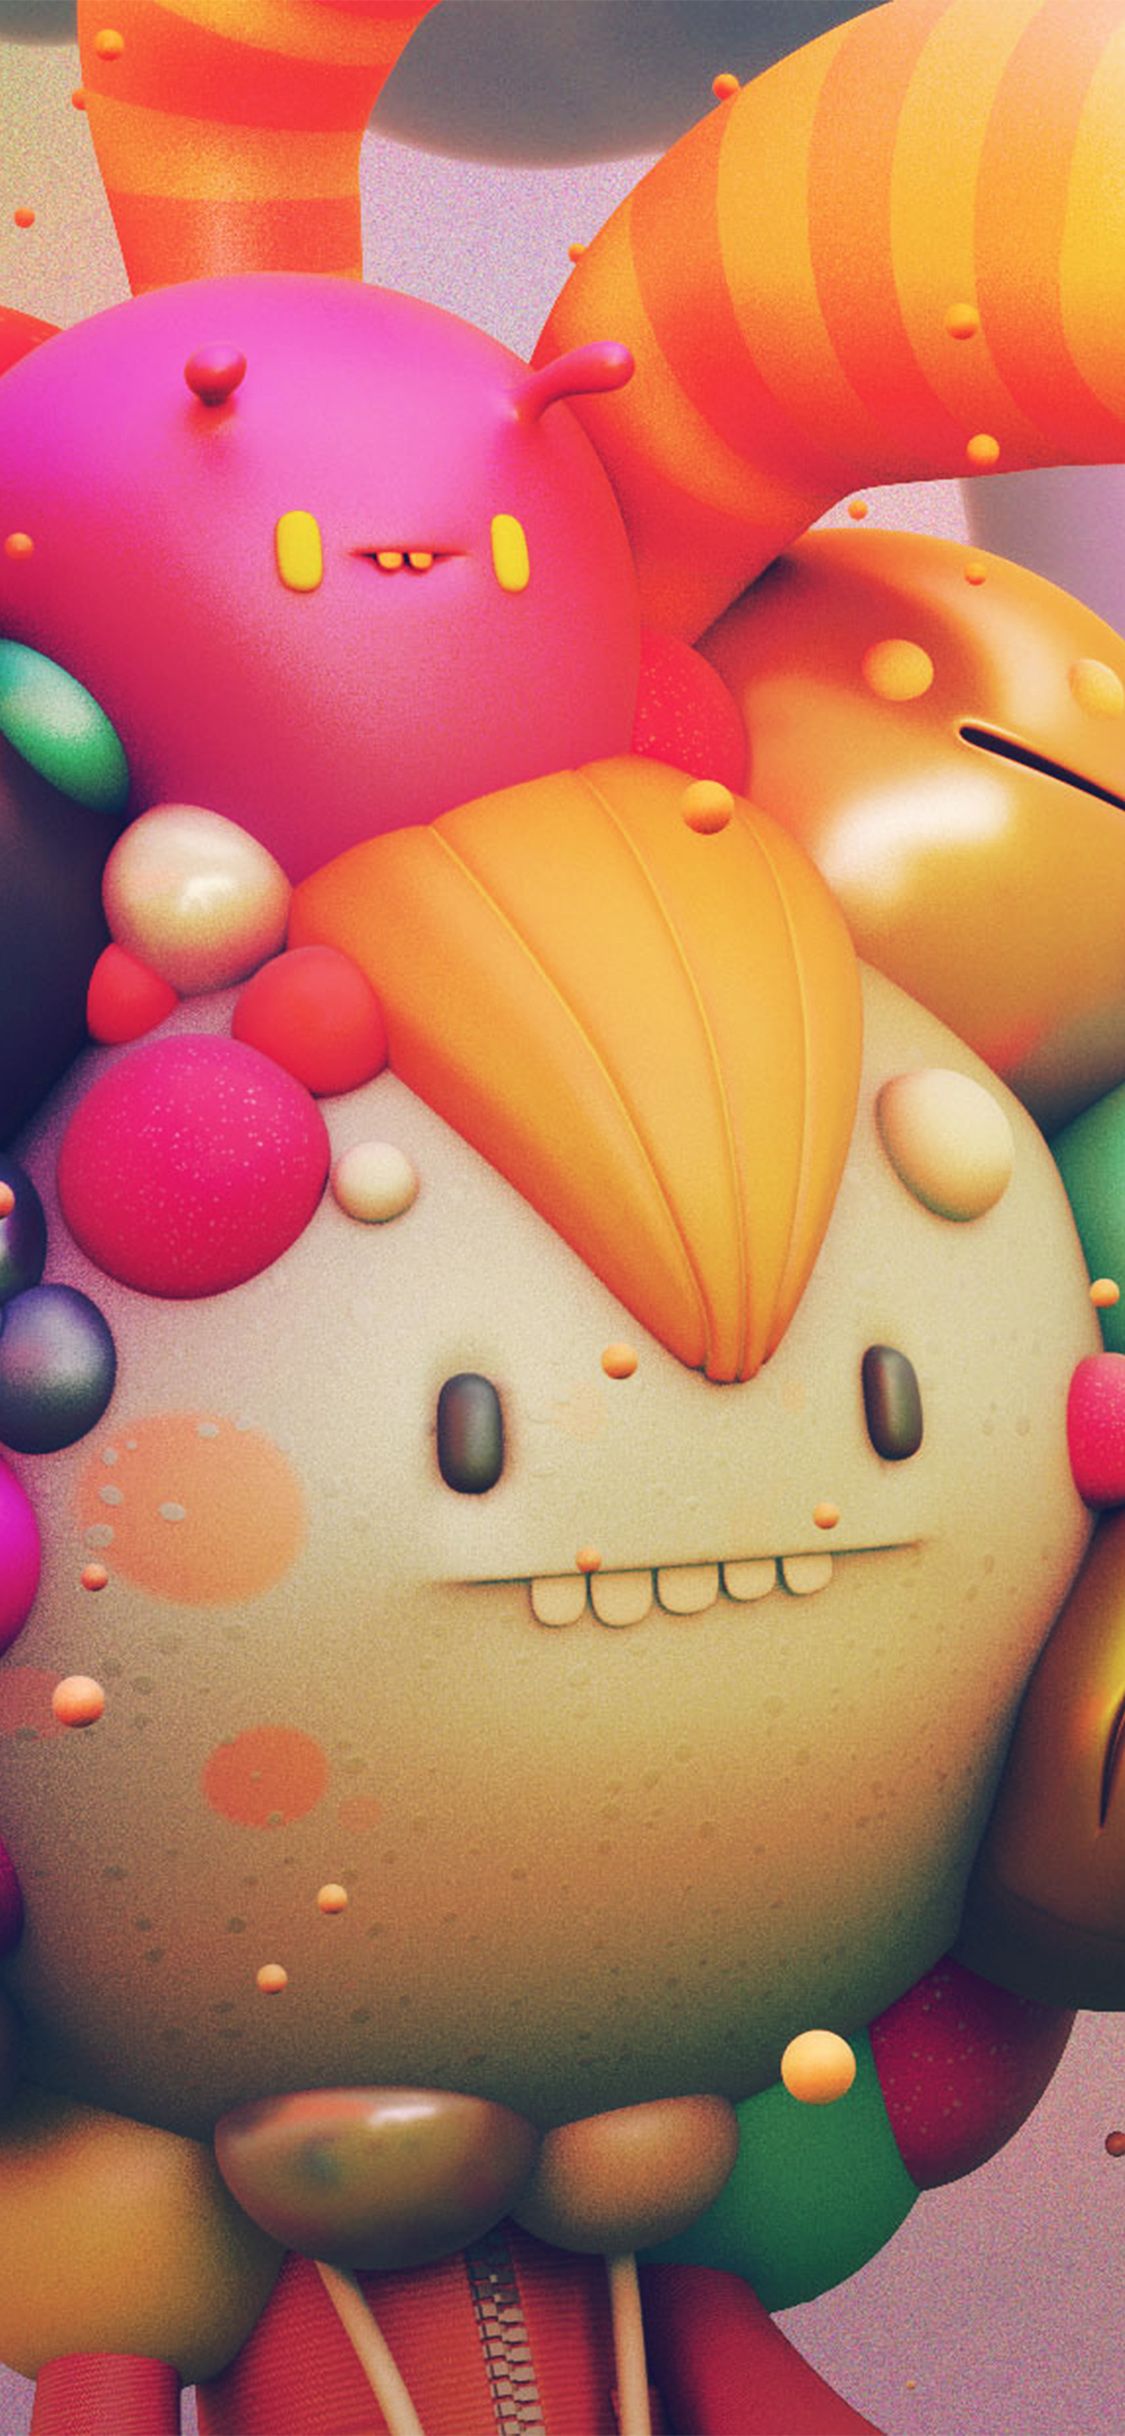 Cute Monster Character 3D Illustration Art Wallpaper